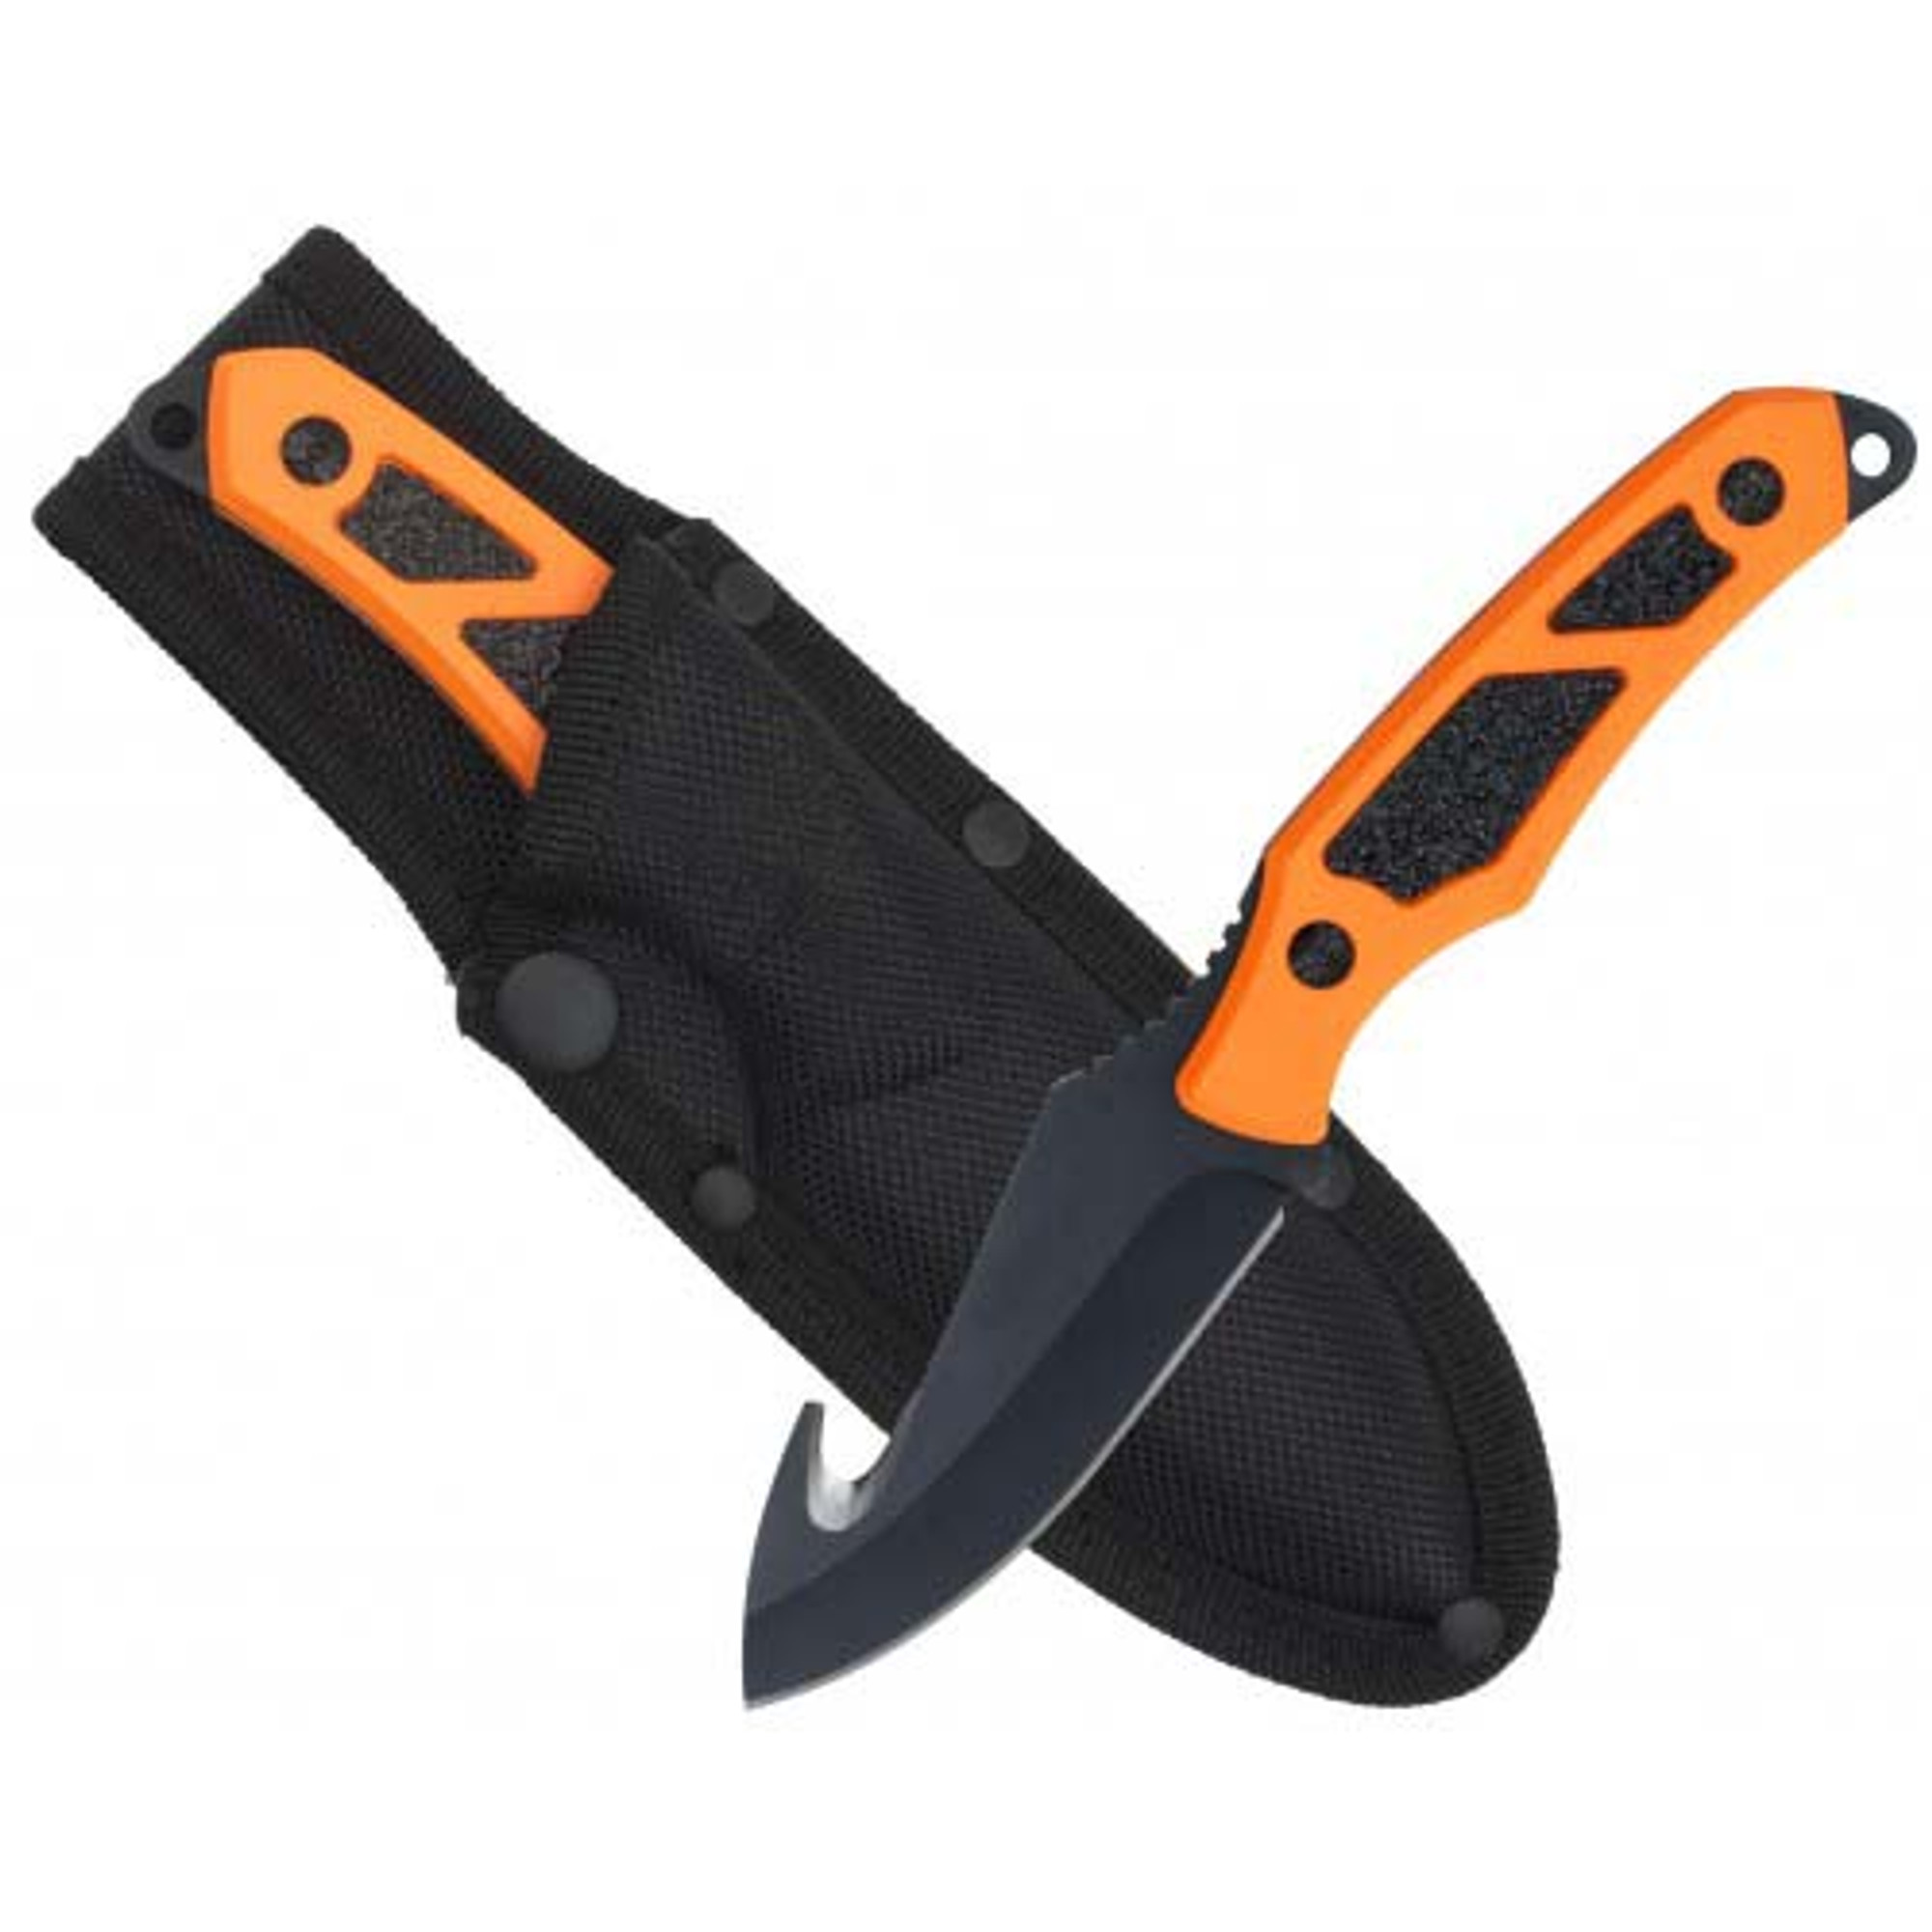 RUKO RUK0155BZ, 440A, 3-1/2" Fixed Gut Hook Blade Knife, Blaze Orange Aluminum Handle w/Grip tape Inserts, boxed